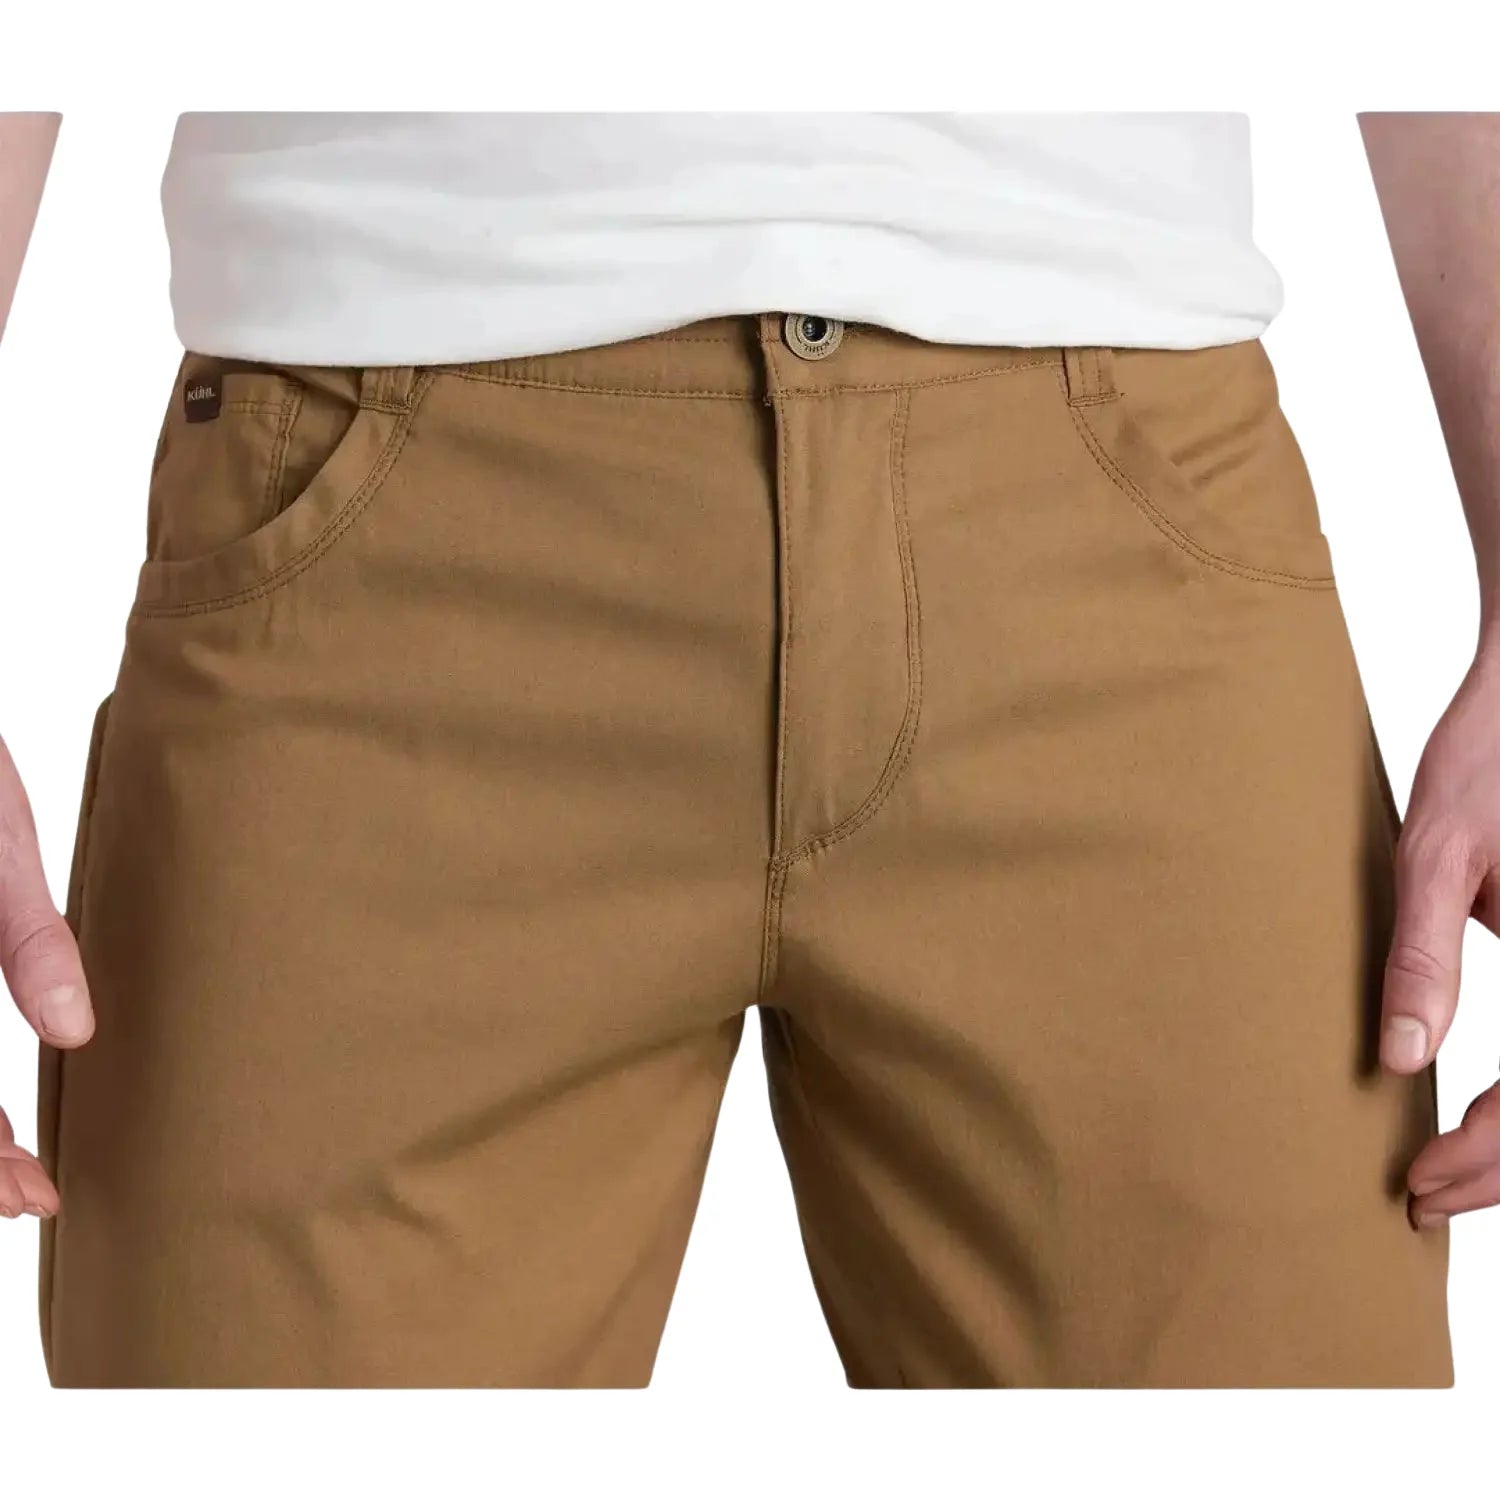 KÜHL Men's RESISTOR™ AIR Pants shown in the Dark Khaki color option. Front view.